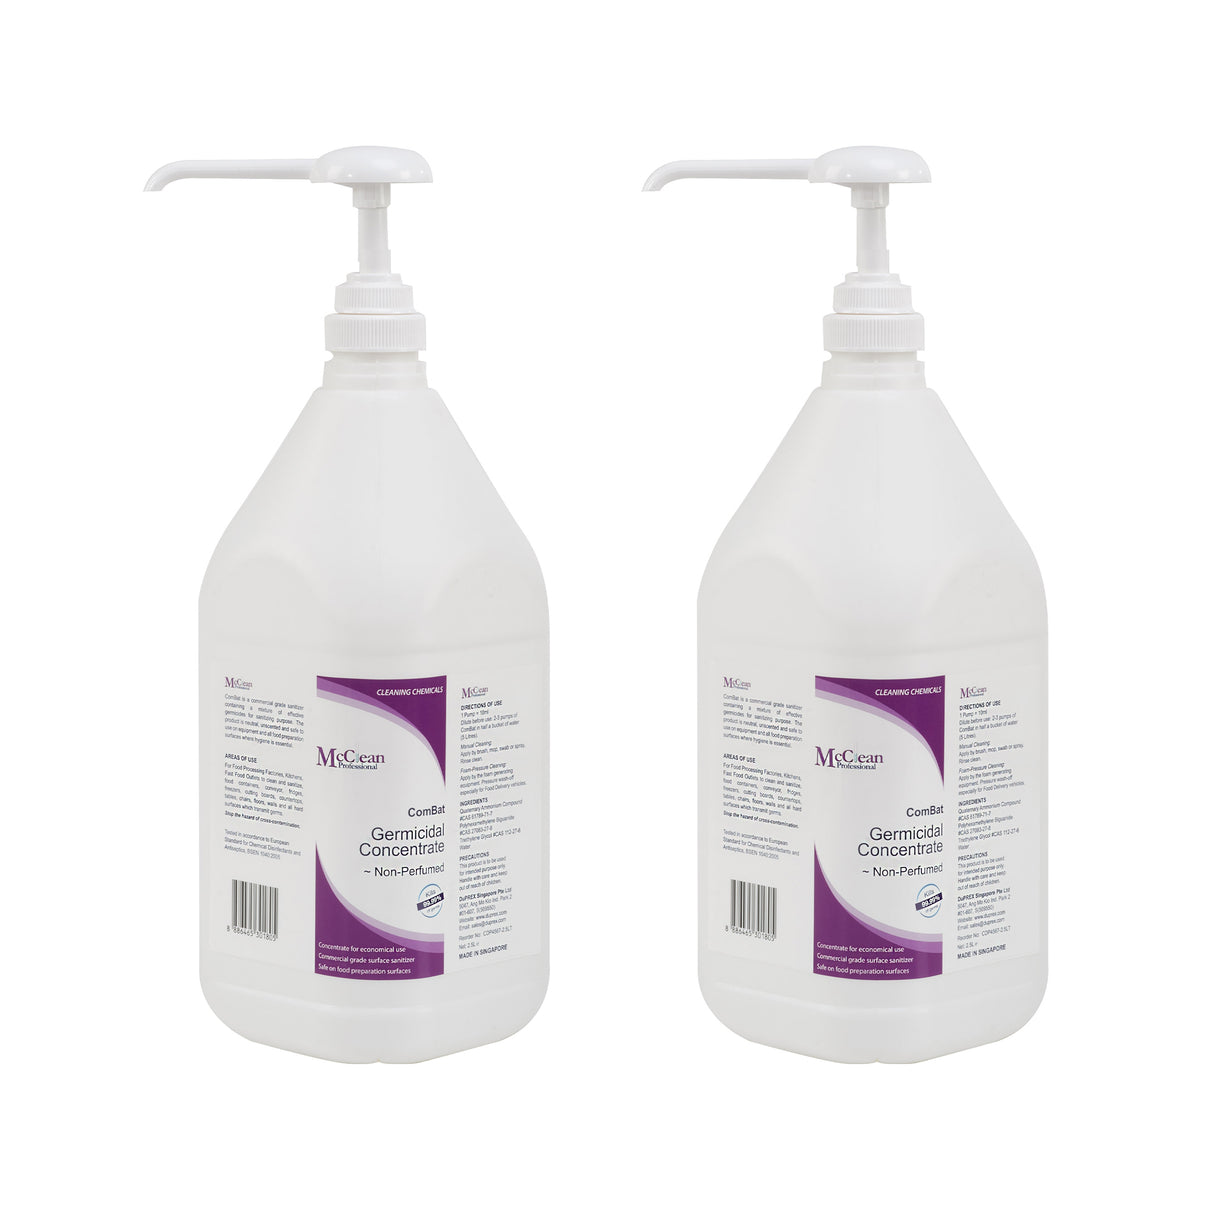 McClean® ComBat Germicidal Concentrate – Non Perfumed 2 x 2.5LT